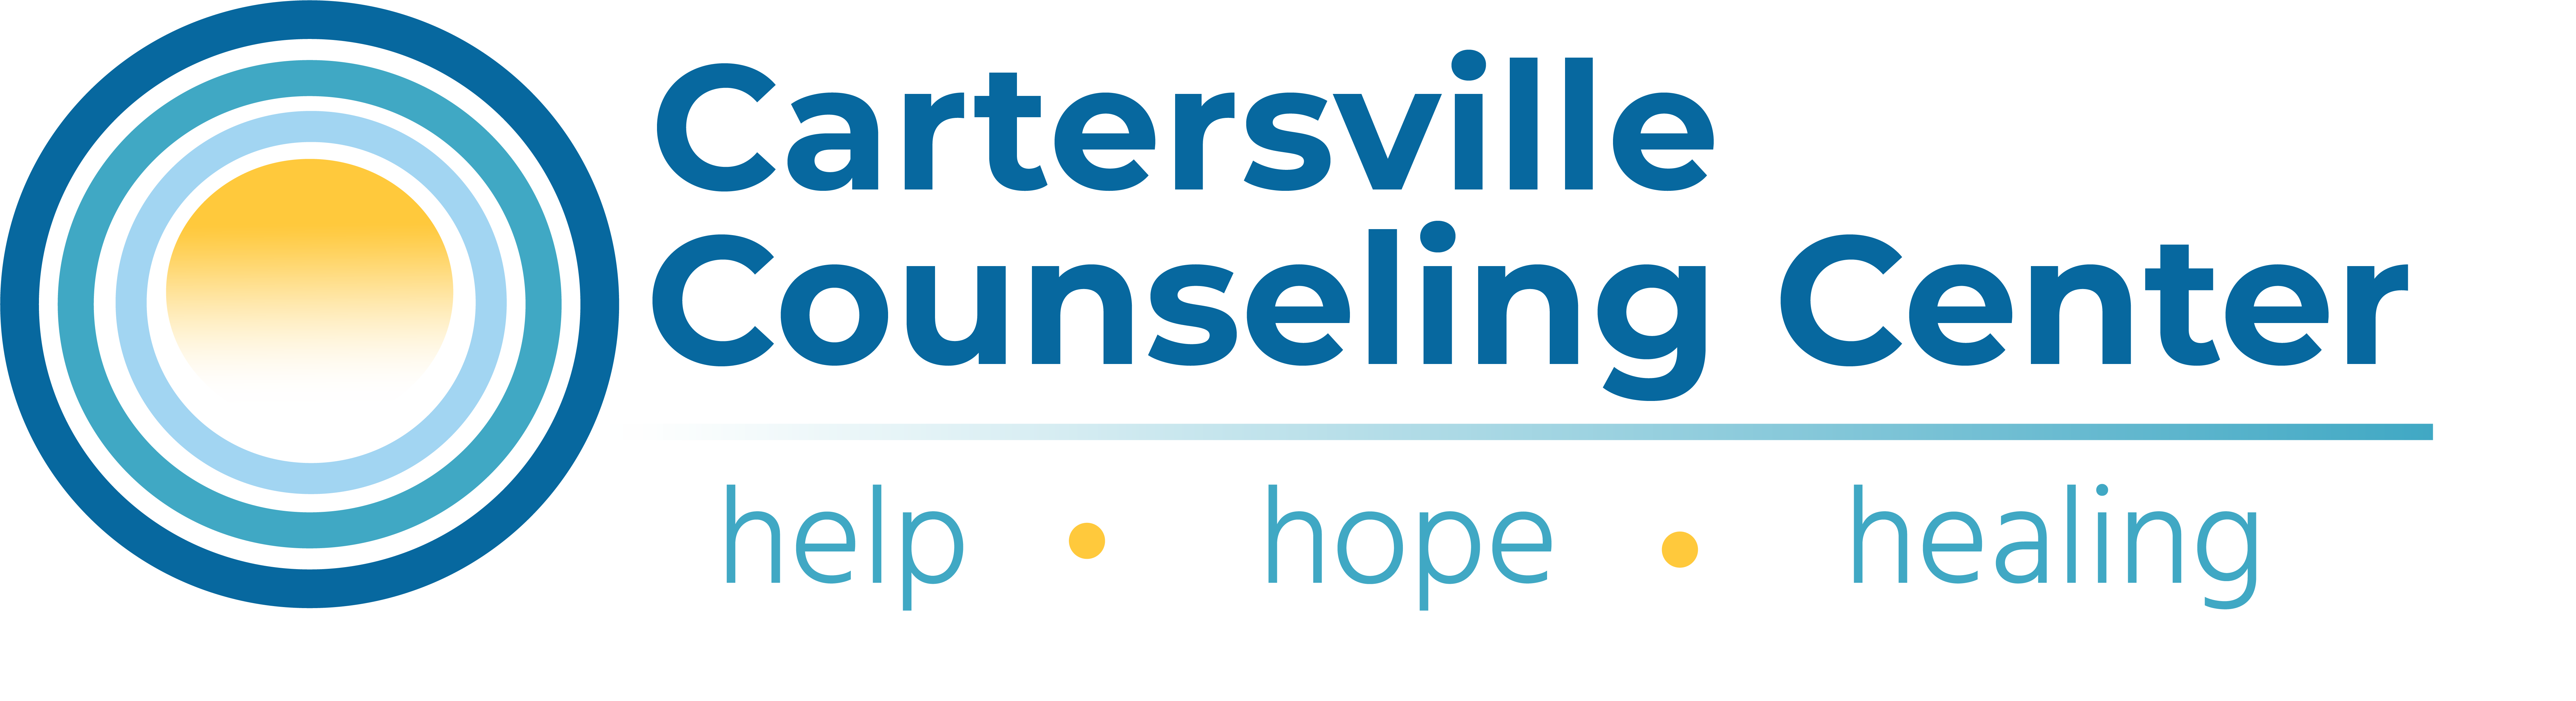 Cartersville Counseling Center